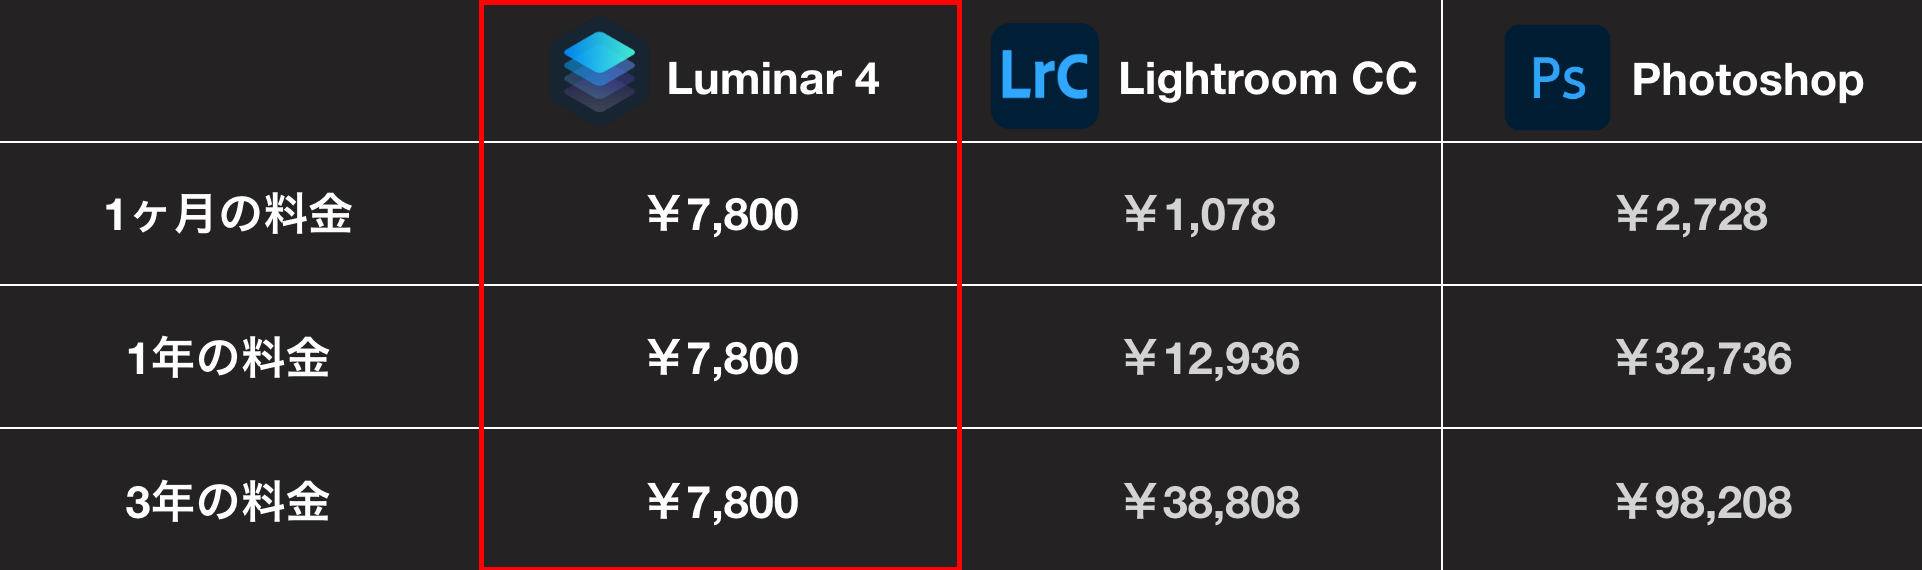 Luminar_LrC_Ps_料金比較